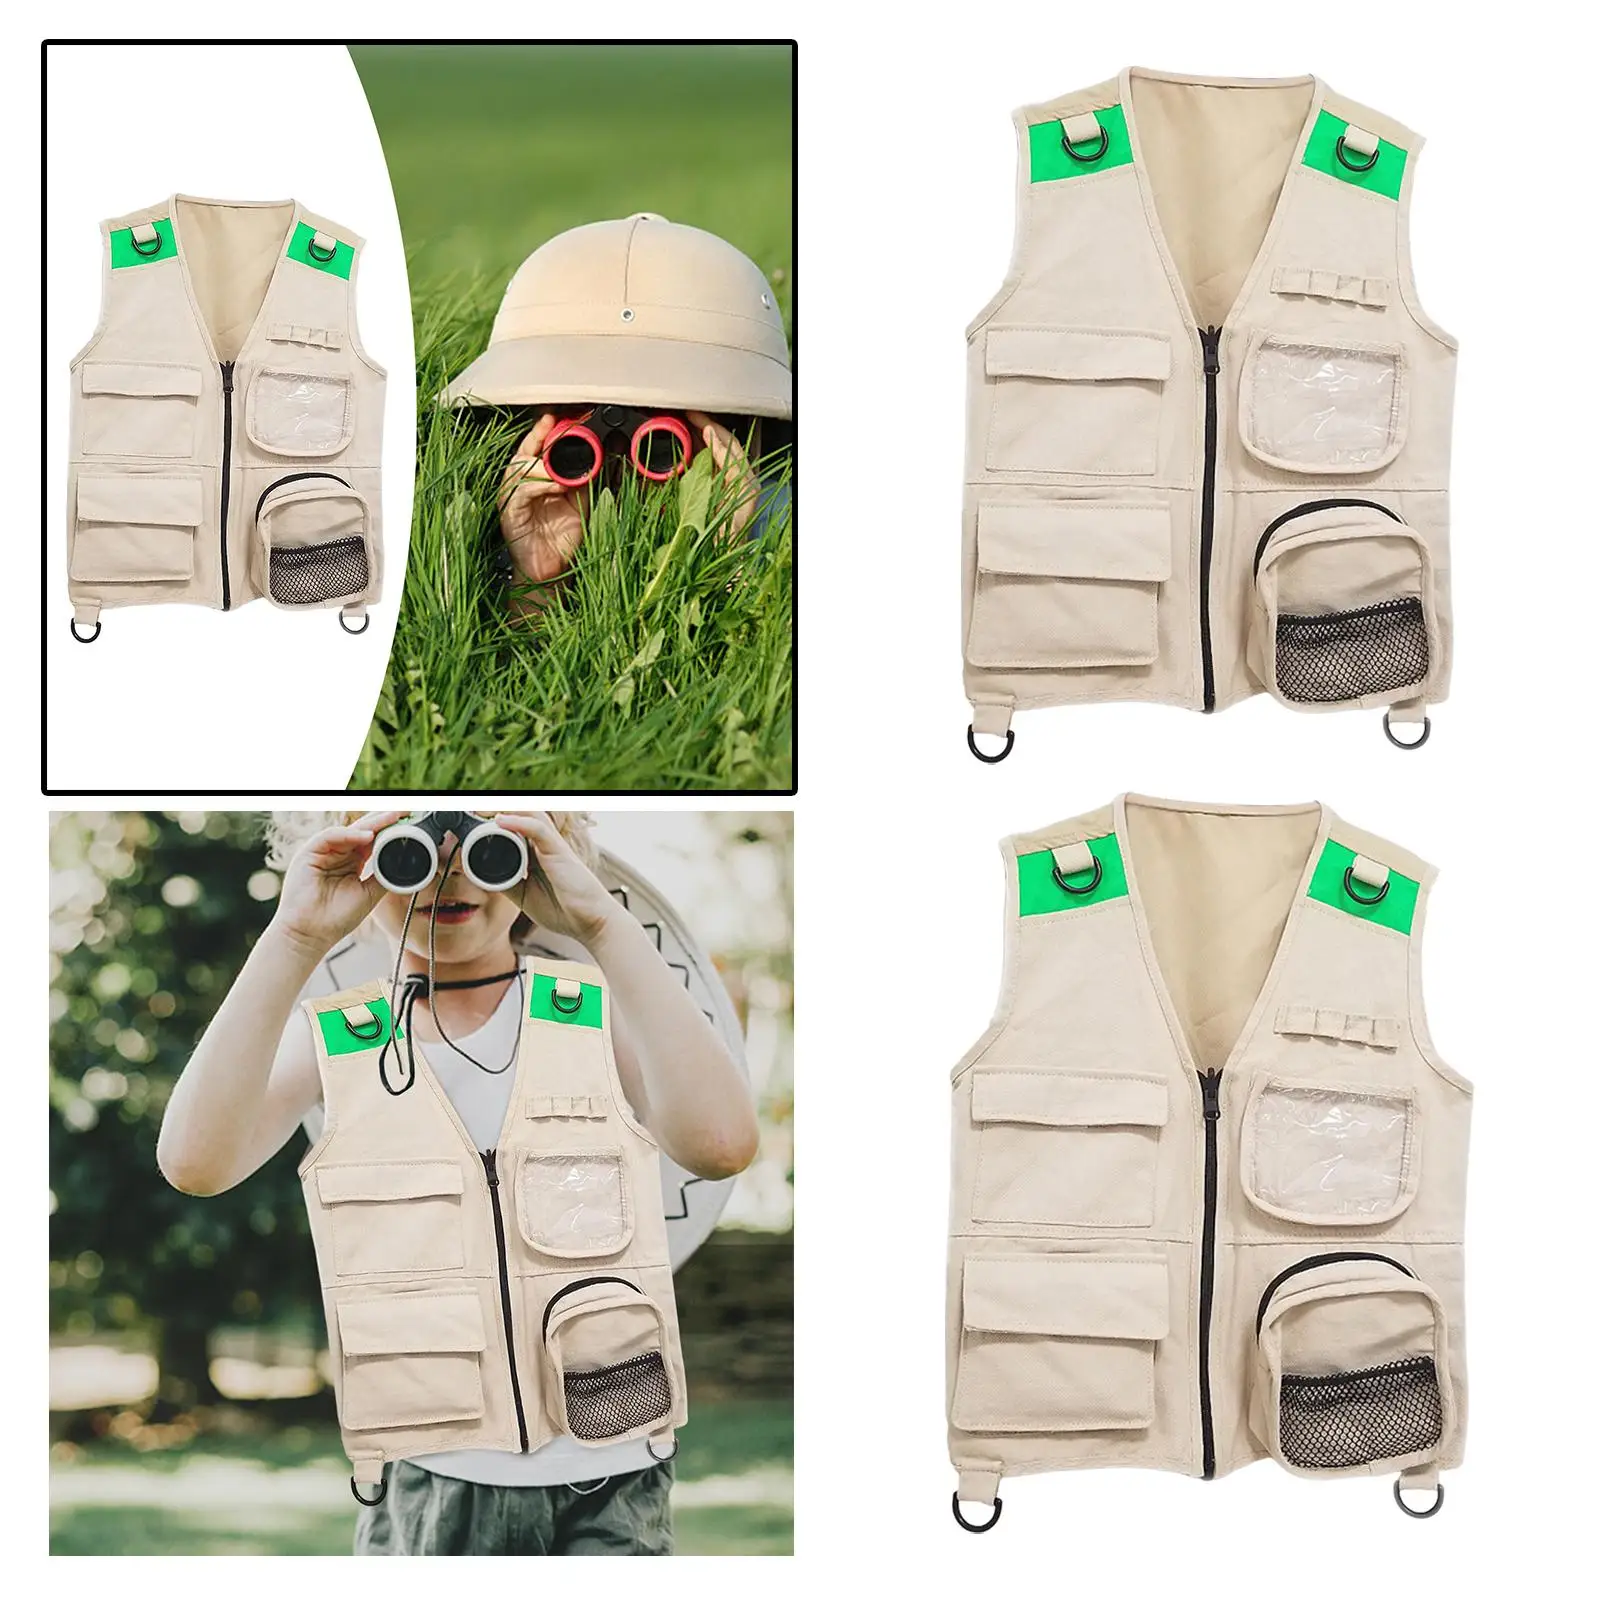 Kids Explorer Costume Vest Backyard Explorer Clothes for Young Children